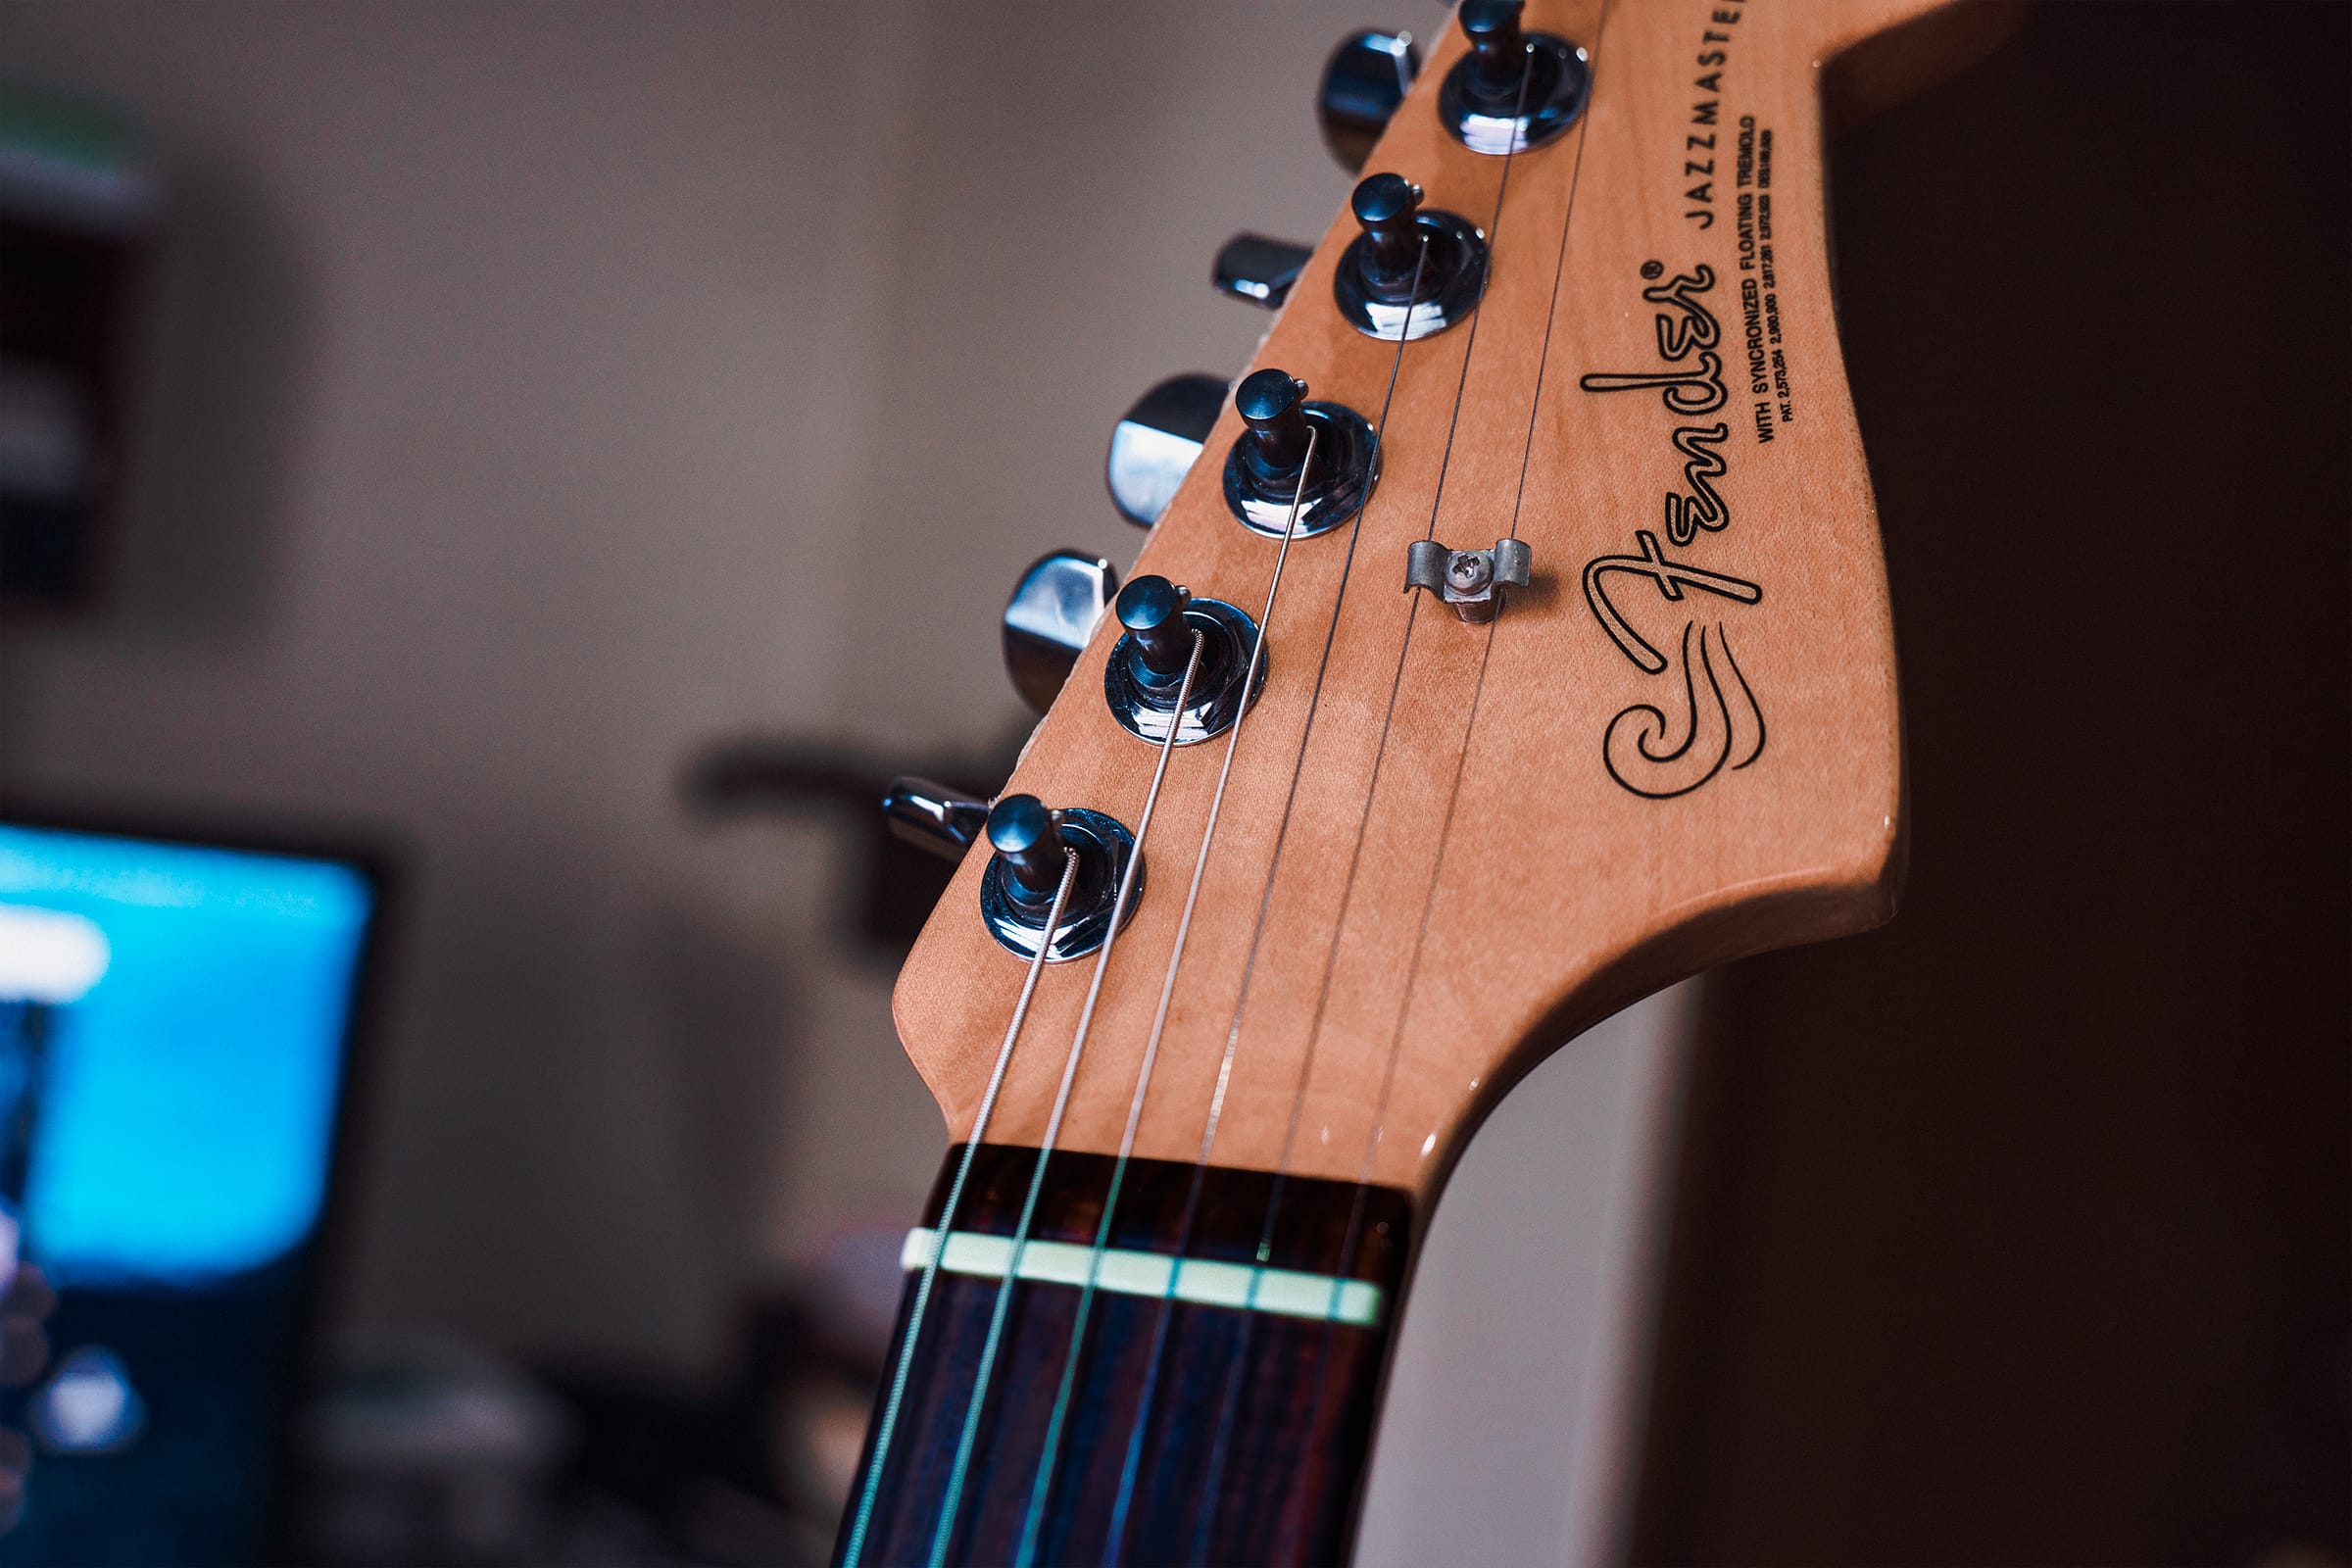 Fender Jazzmasterと書かれたギターのヘッドにAuto-Trimペグが付いている写真